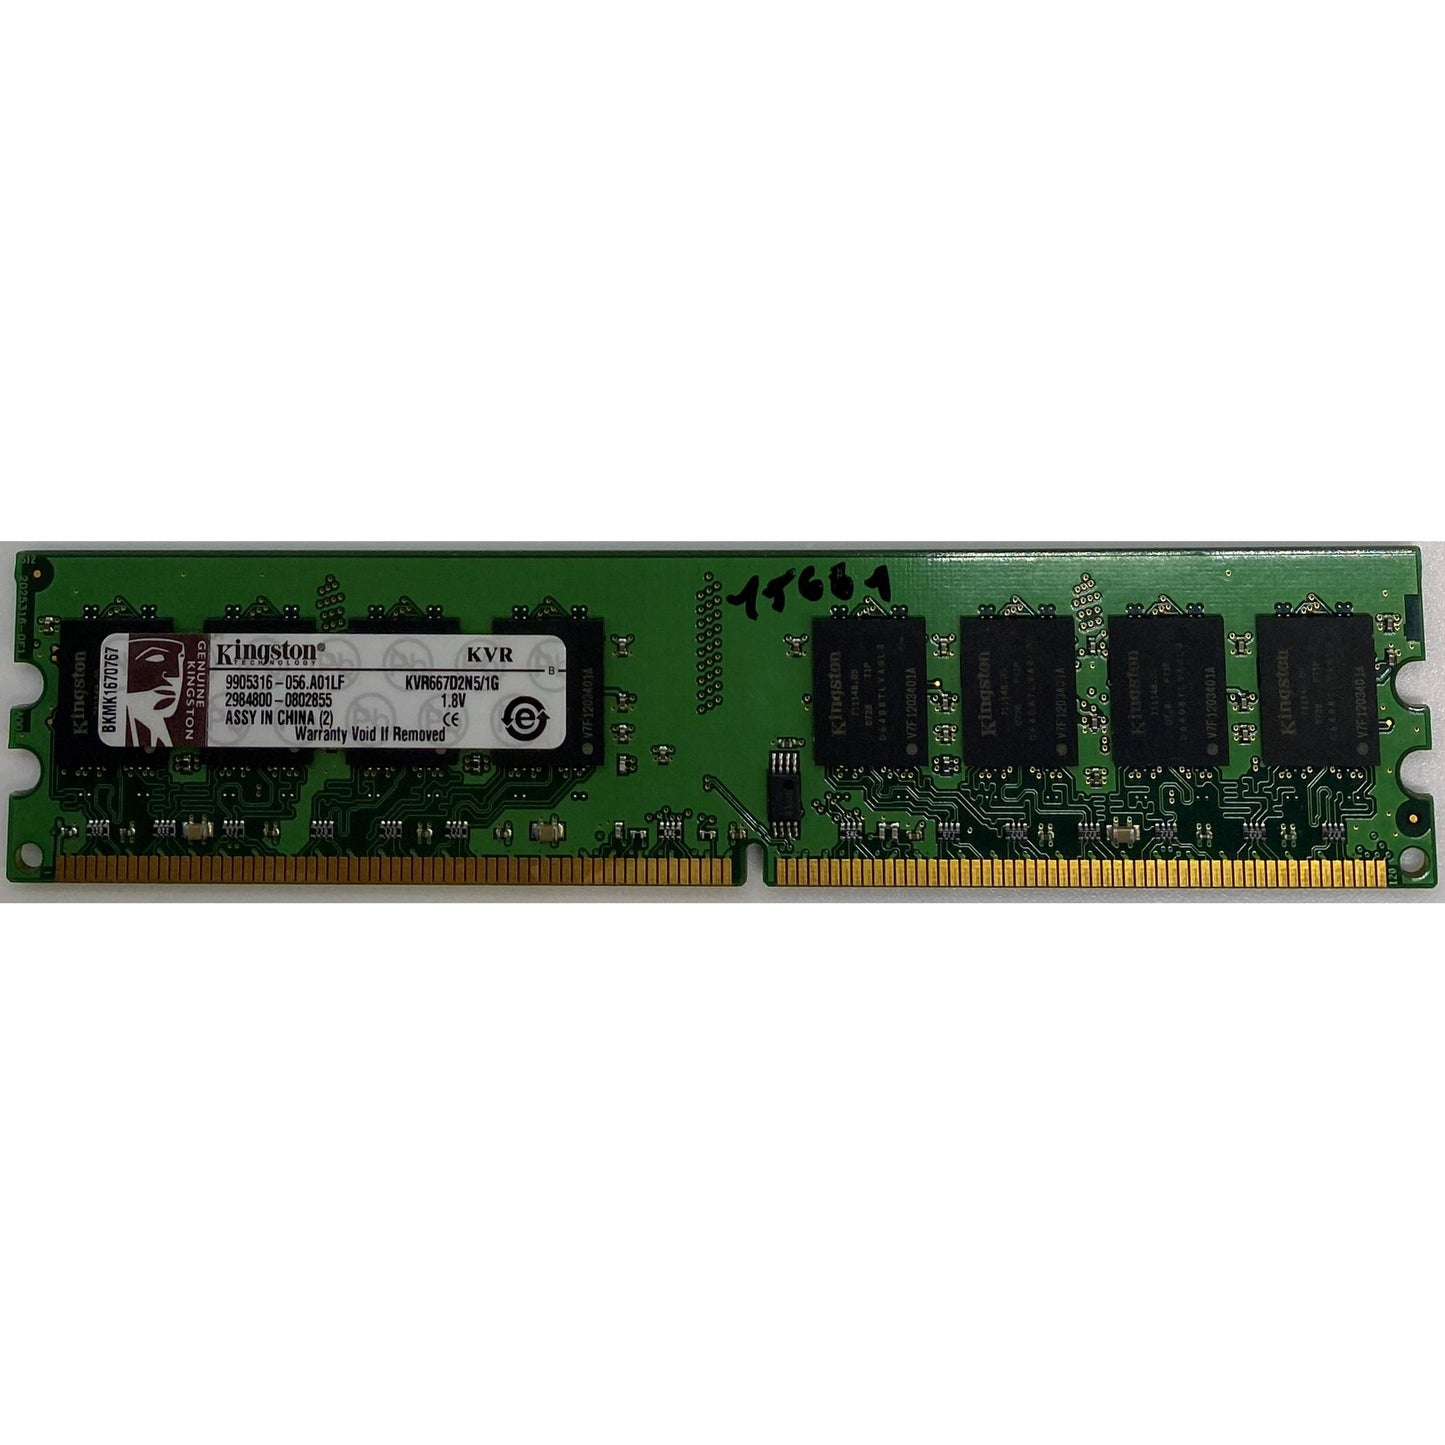 DDR2 DIMM RAM | 667MHz 800MHz | 512MB - 8GB